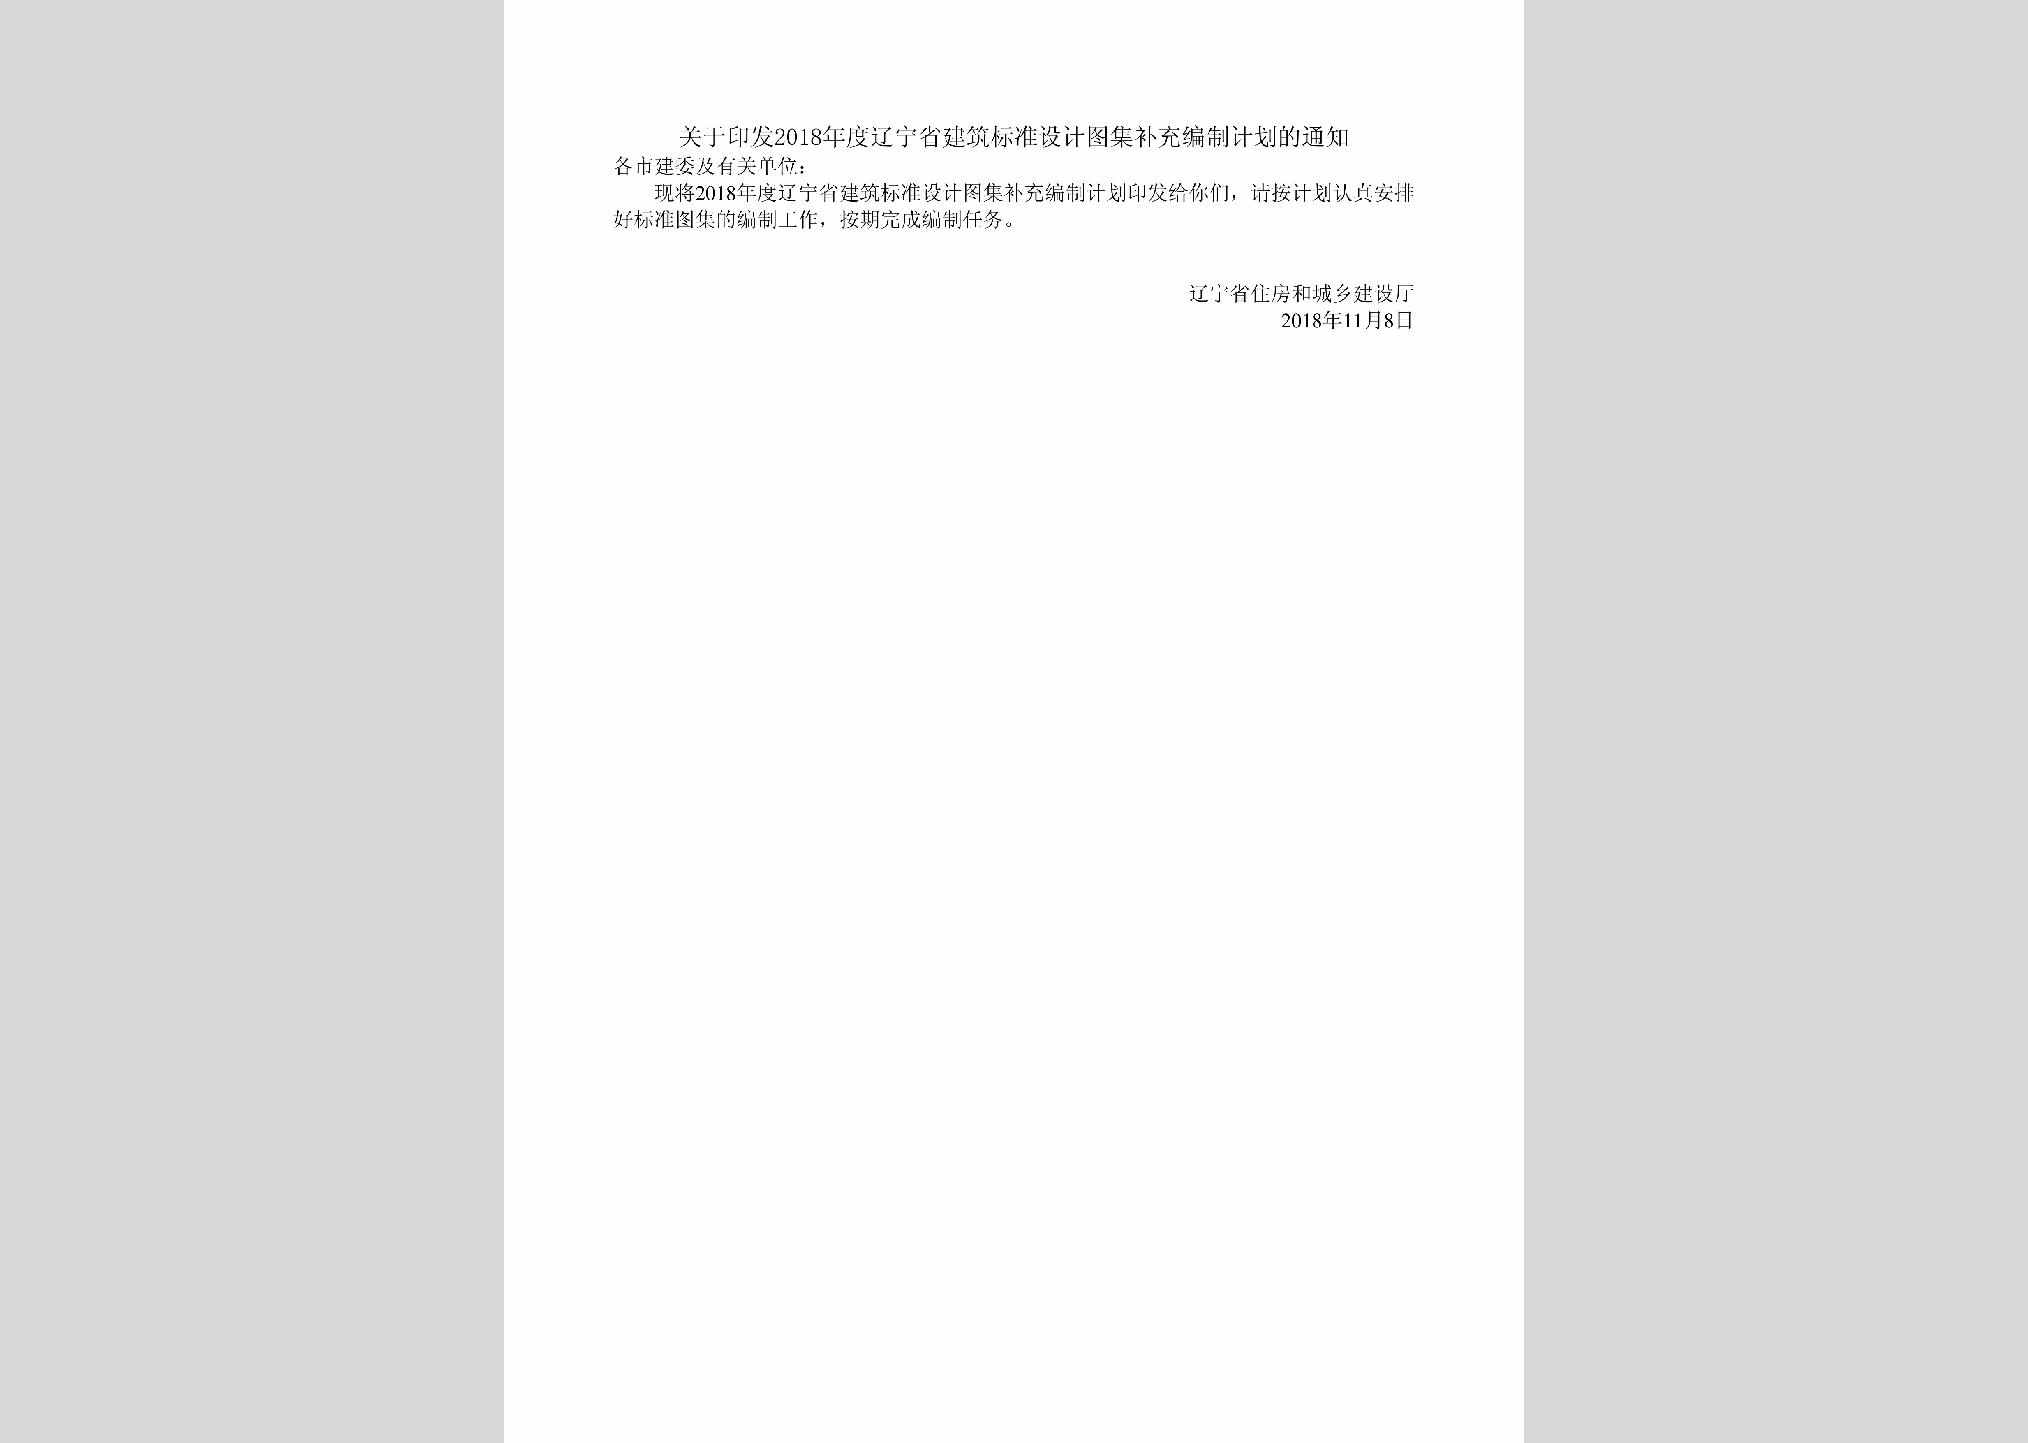 LN-JZBZSJTJ-2018：关于印发2018年度辽宁省建筑标准设计图集补充编制计划的通知